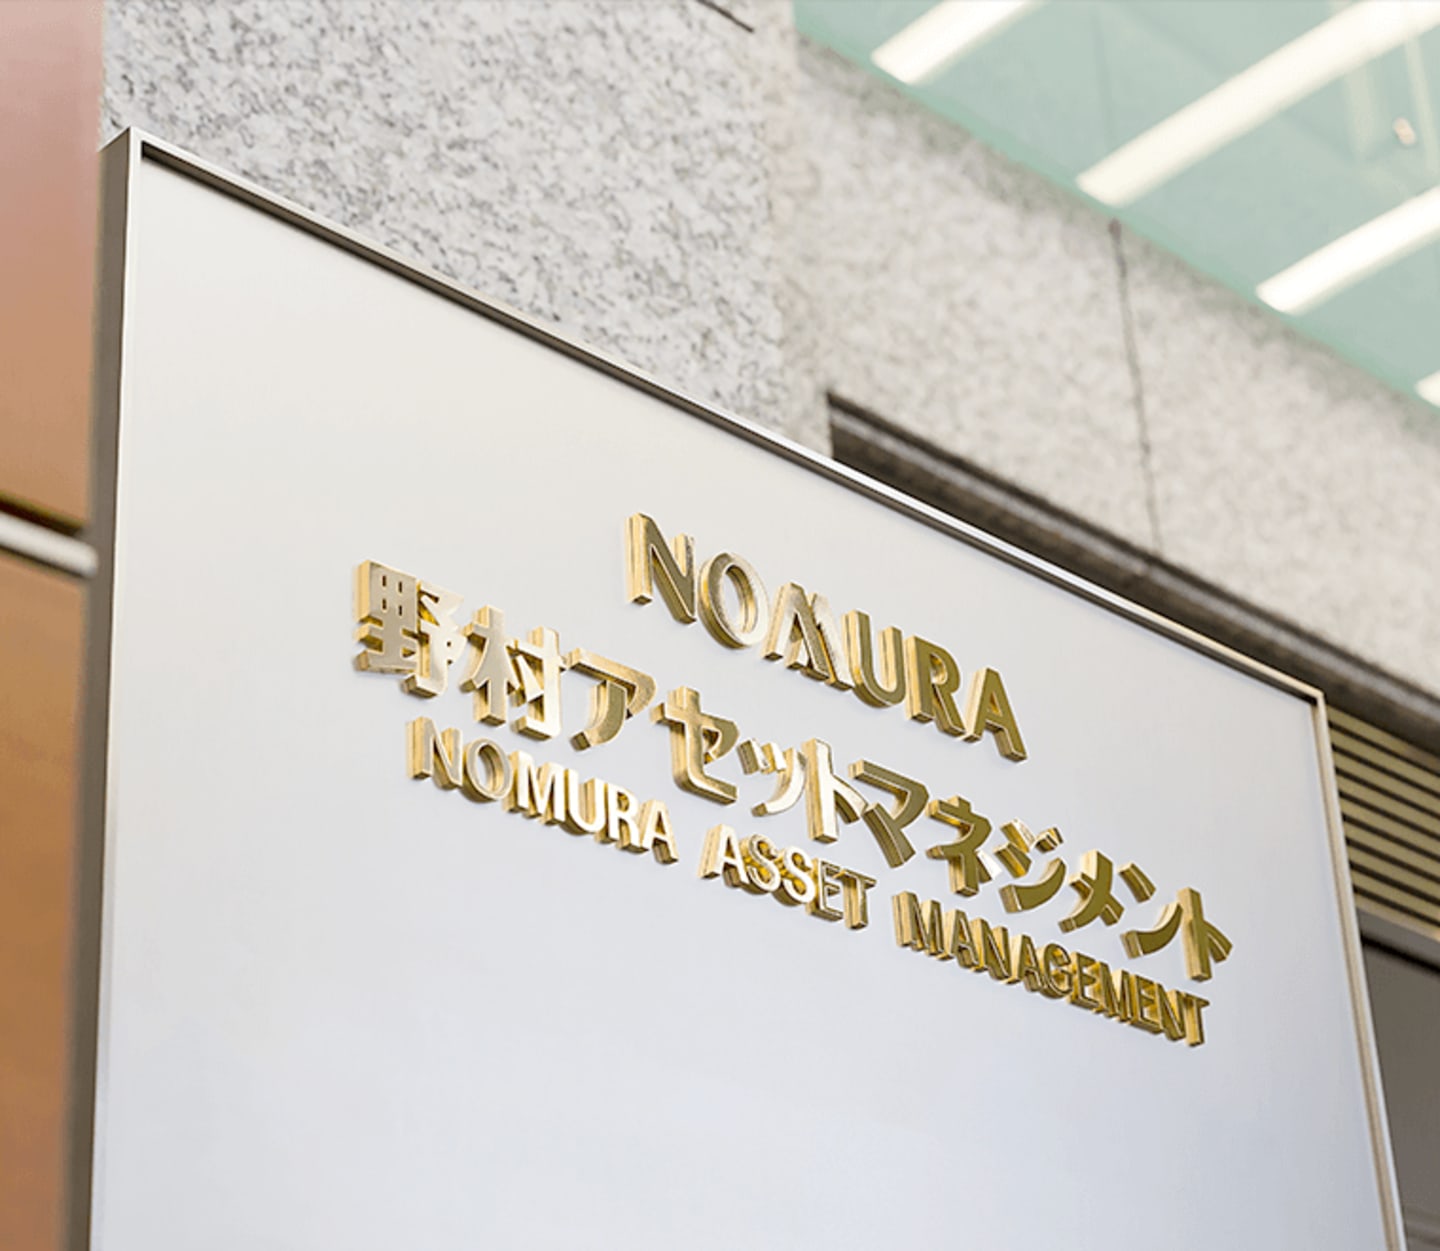 Nomura Asset Management Sign.